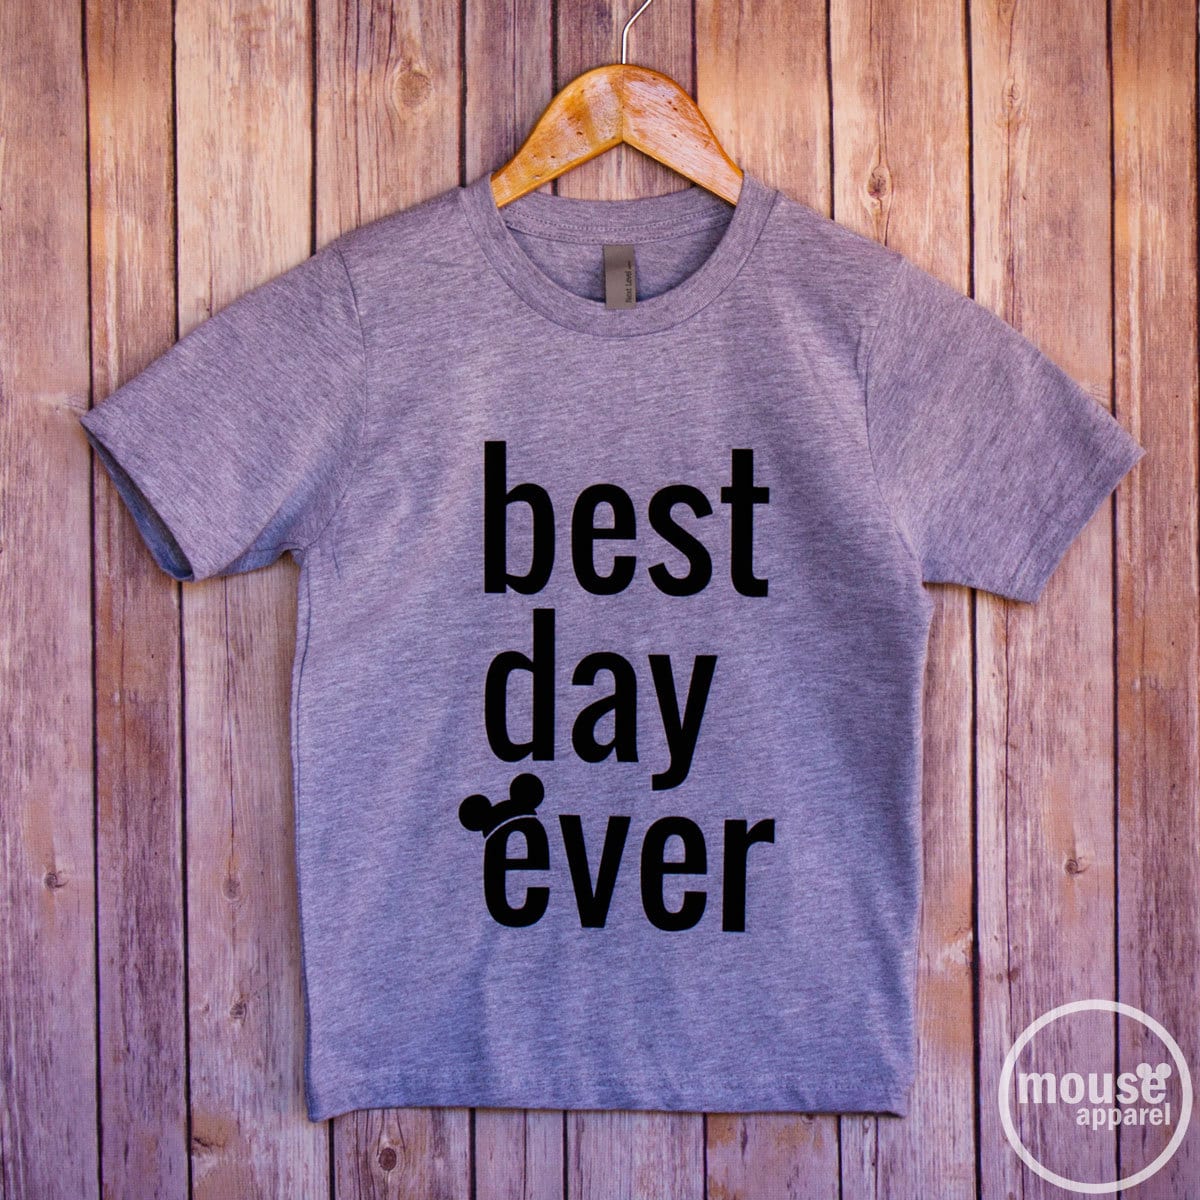 Best Day Ever Kids Shirt/Disney Shirt/Disney Kids by